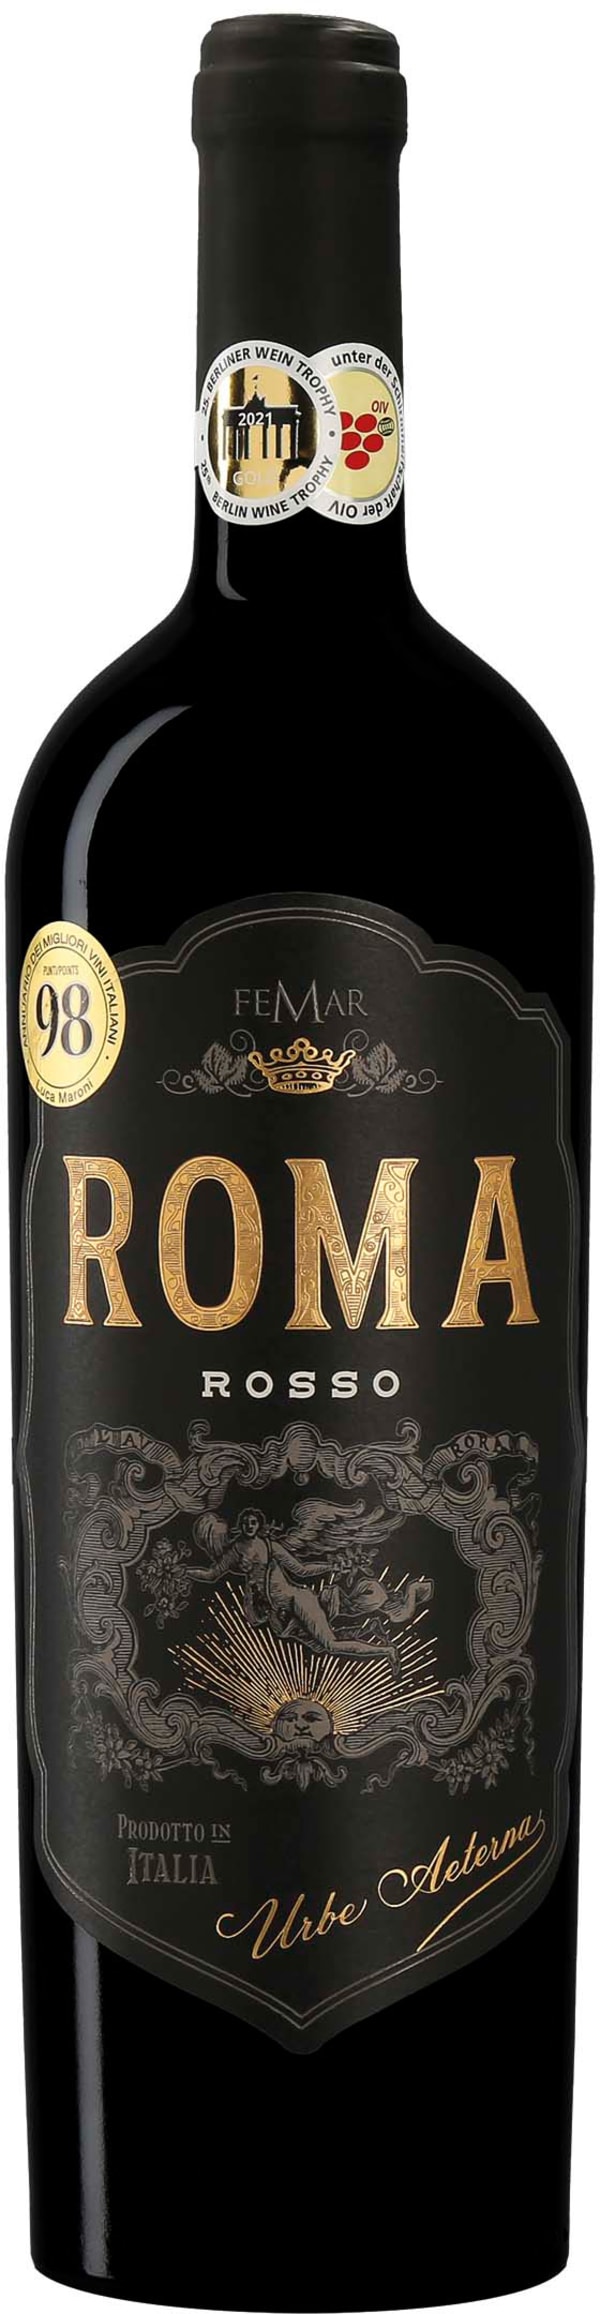 Roma 2019 Rosso Femar | Aeterna Alko Urbe